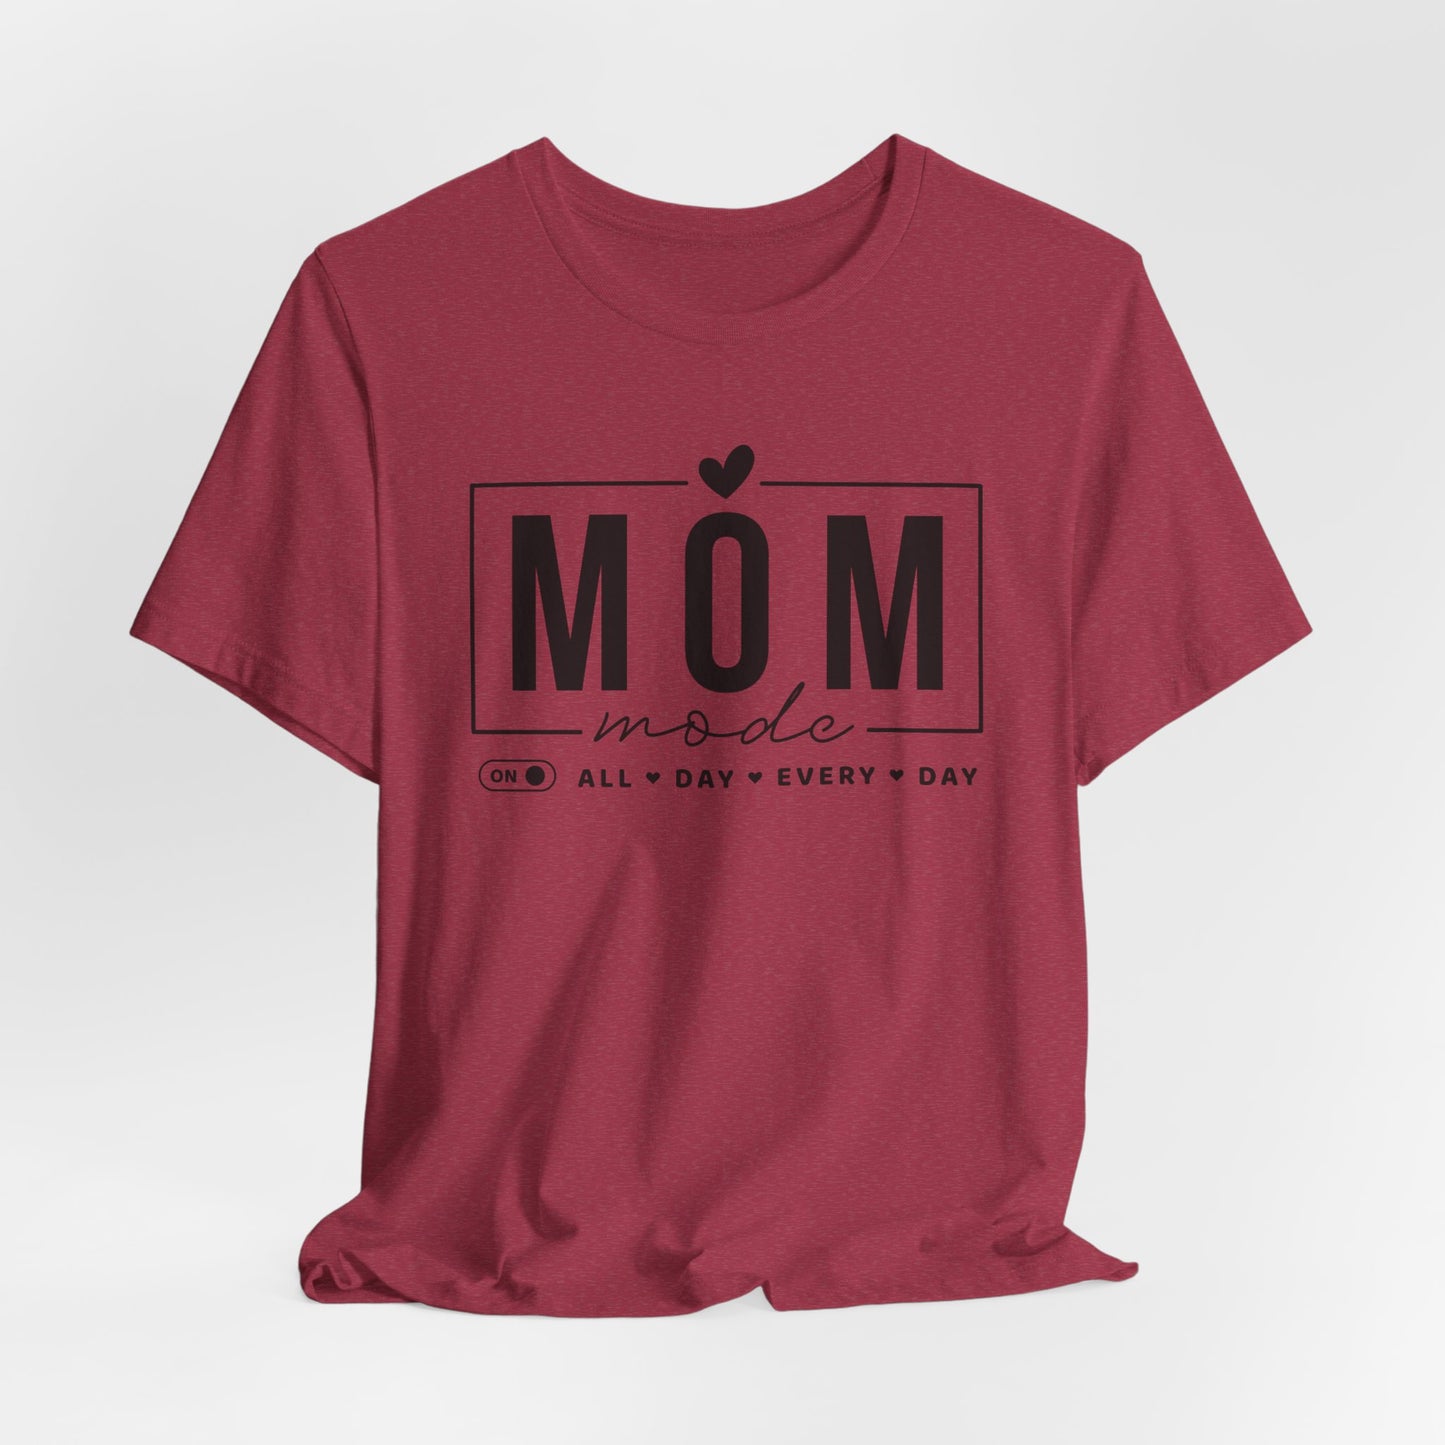 MOM Mode Women's Funny Short Sleeve Tshirt